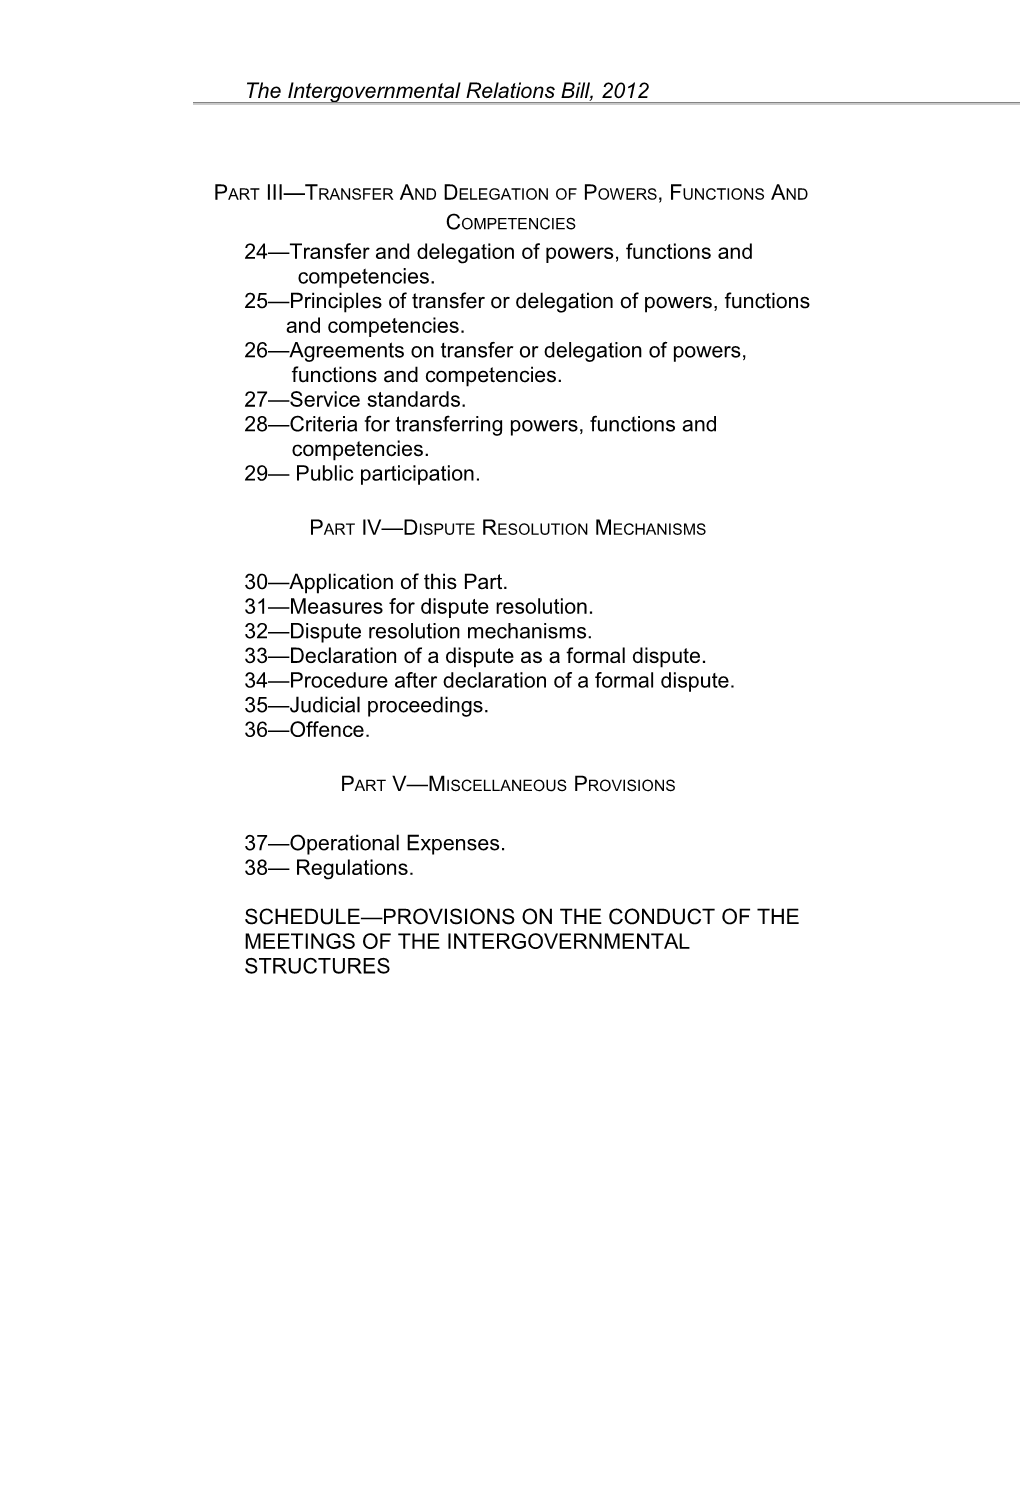 The Intergovernmental Relations Bill, 2012